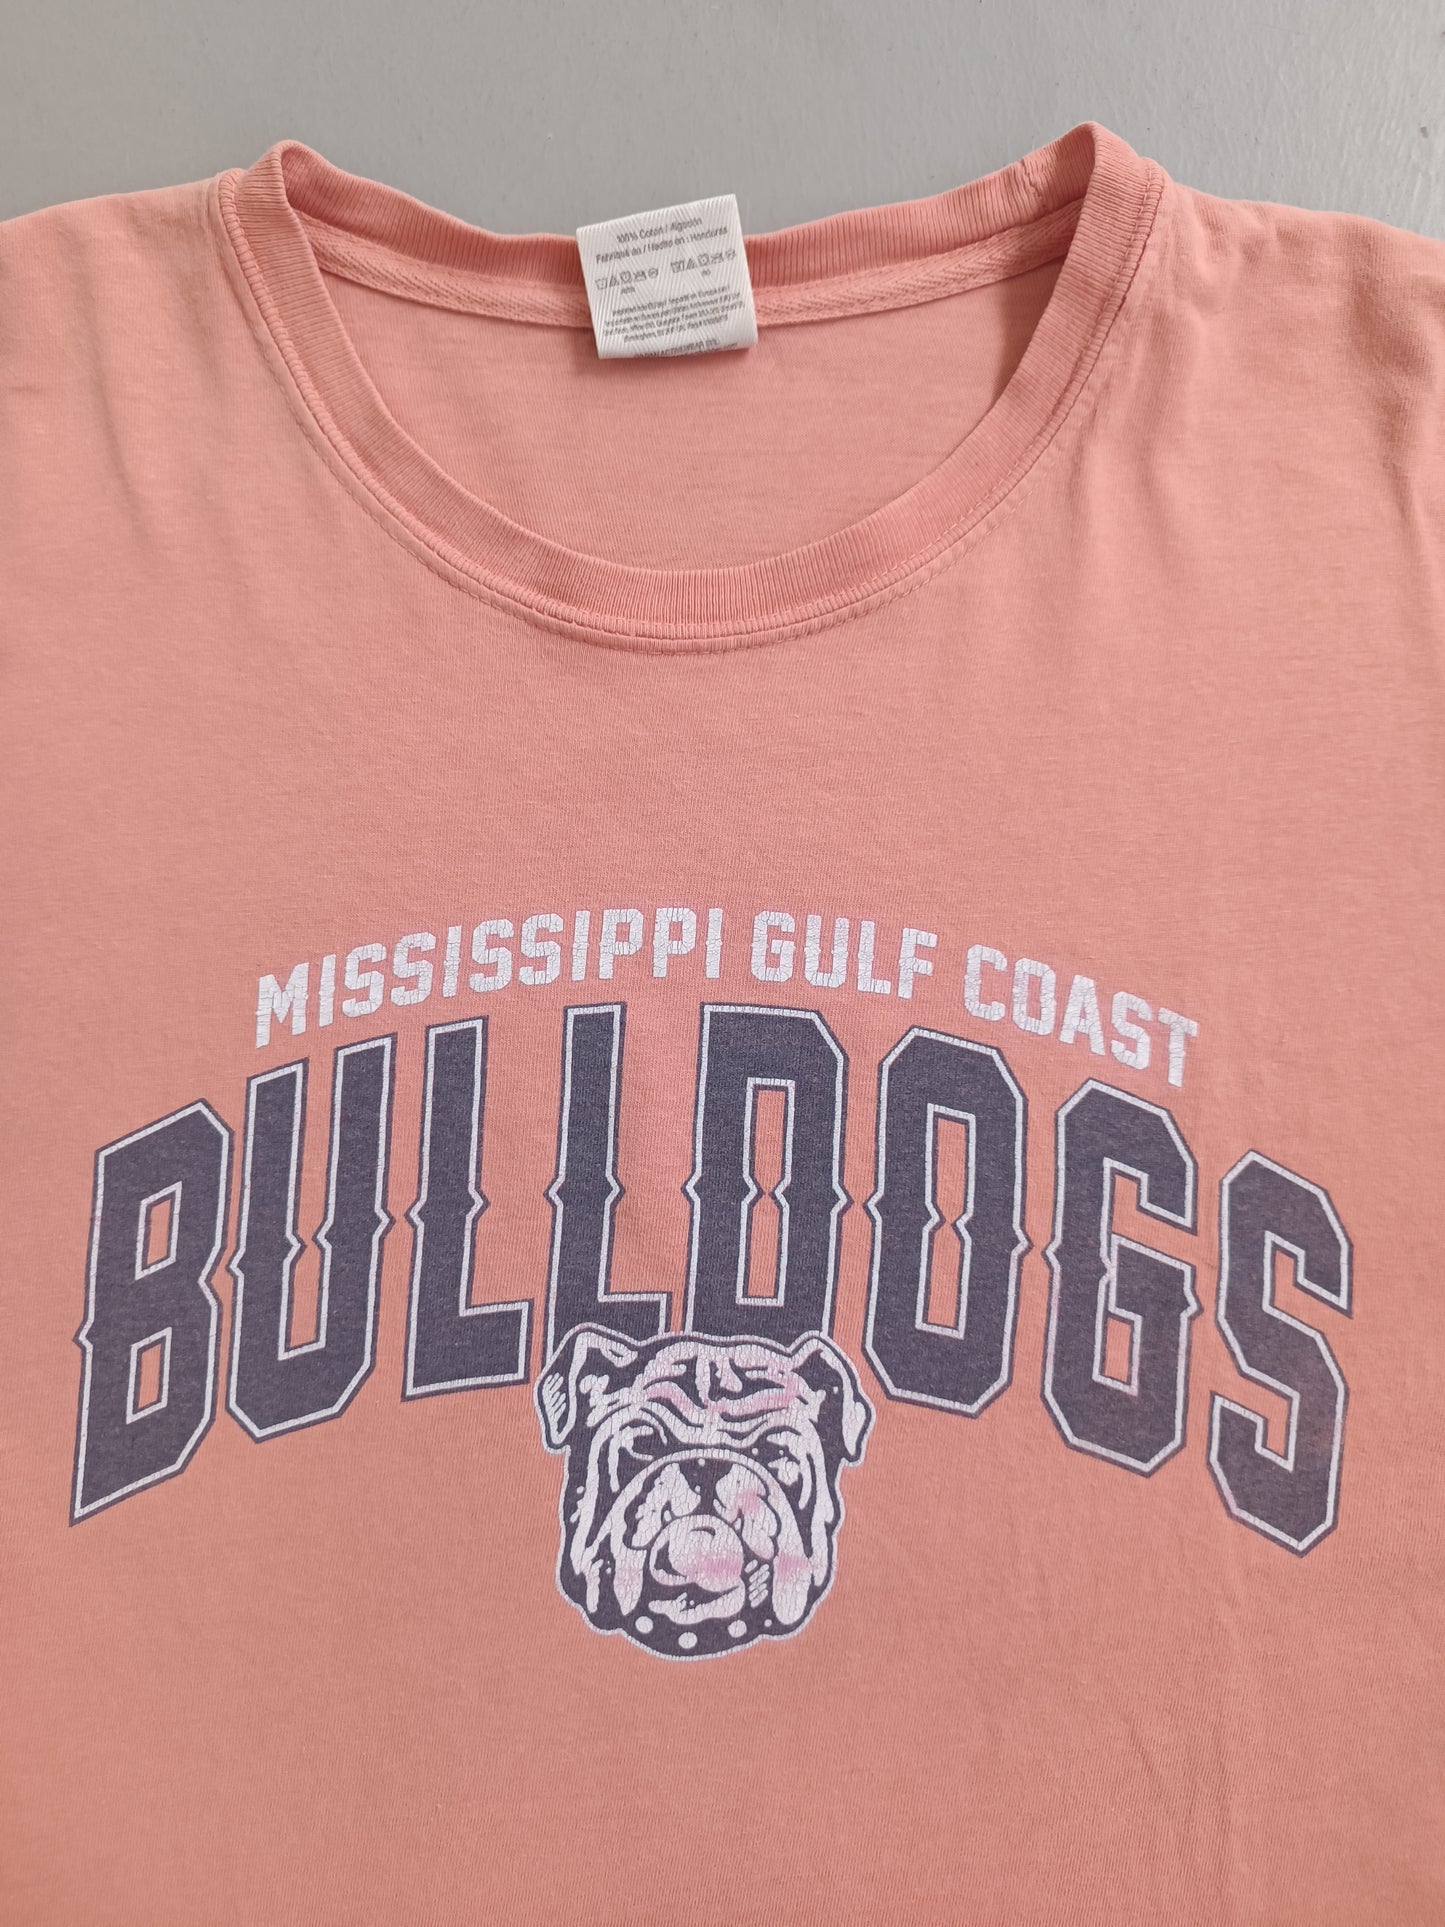 Mississippi Gulf Coast Bulldogs - XL